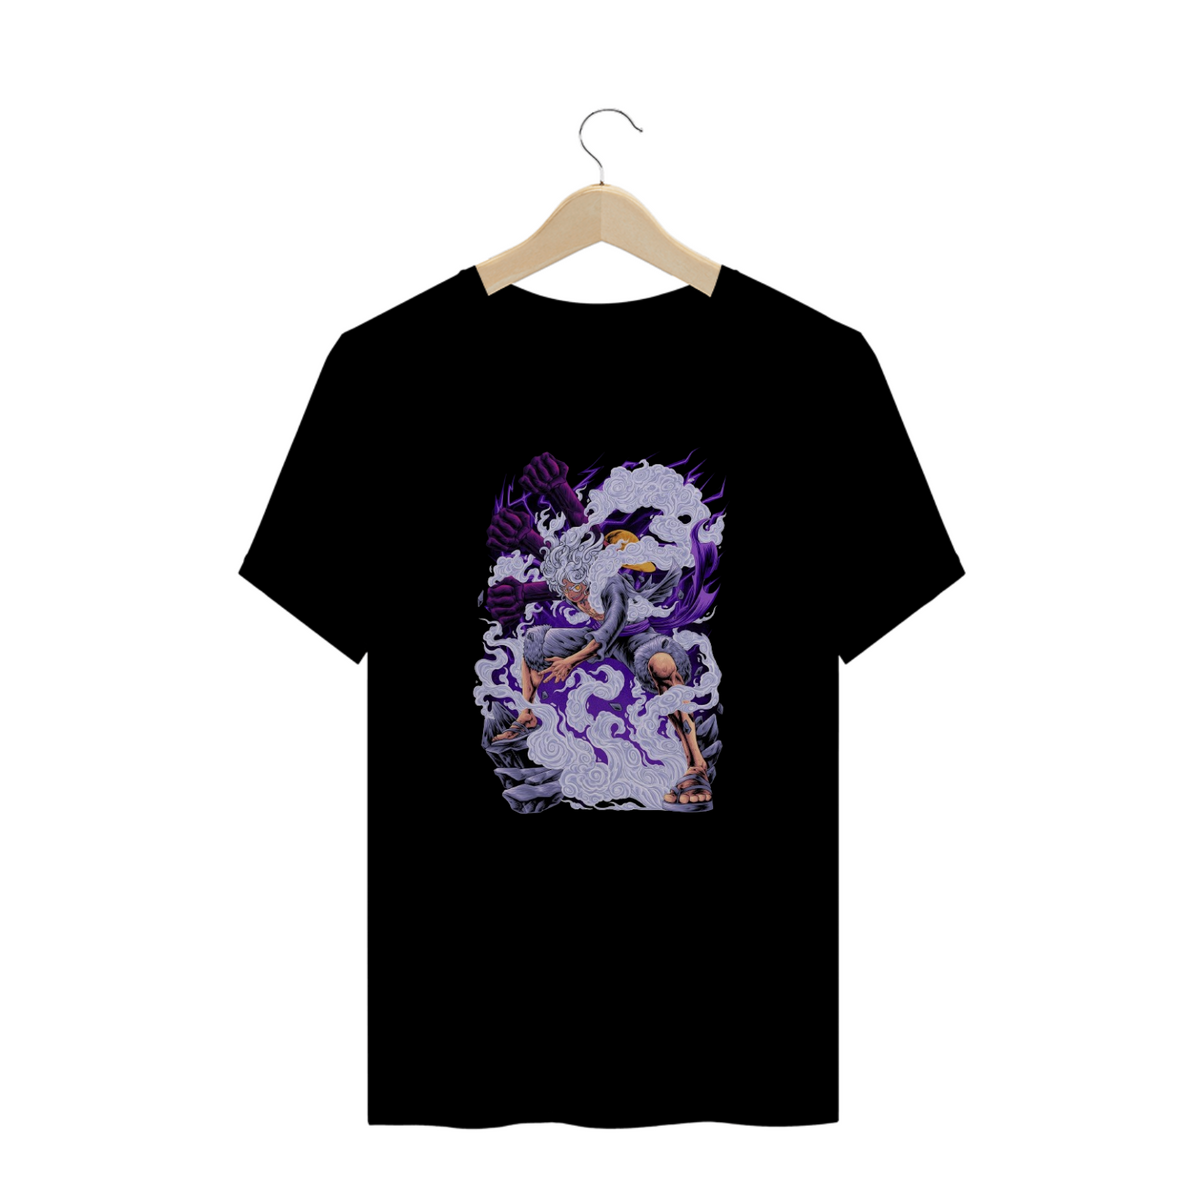 Nome do produto: Camisa T-shirt Plus Size - Luffy Gear 5 ( One Piece )